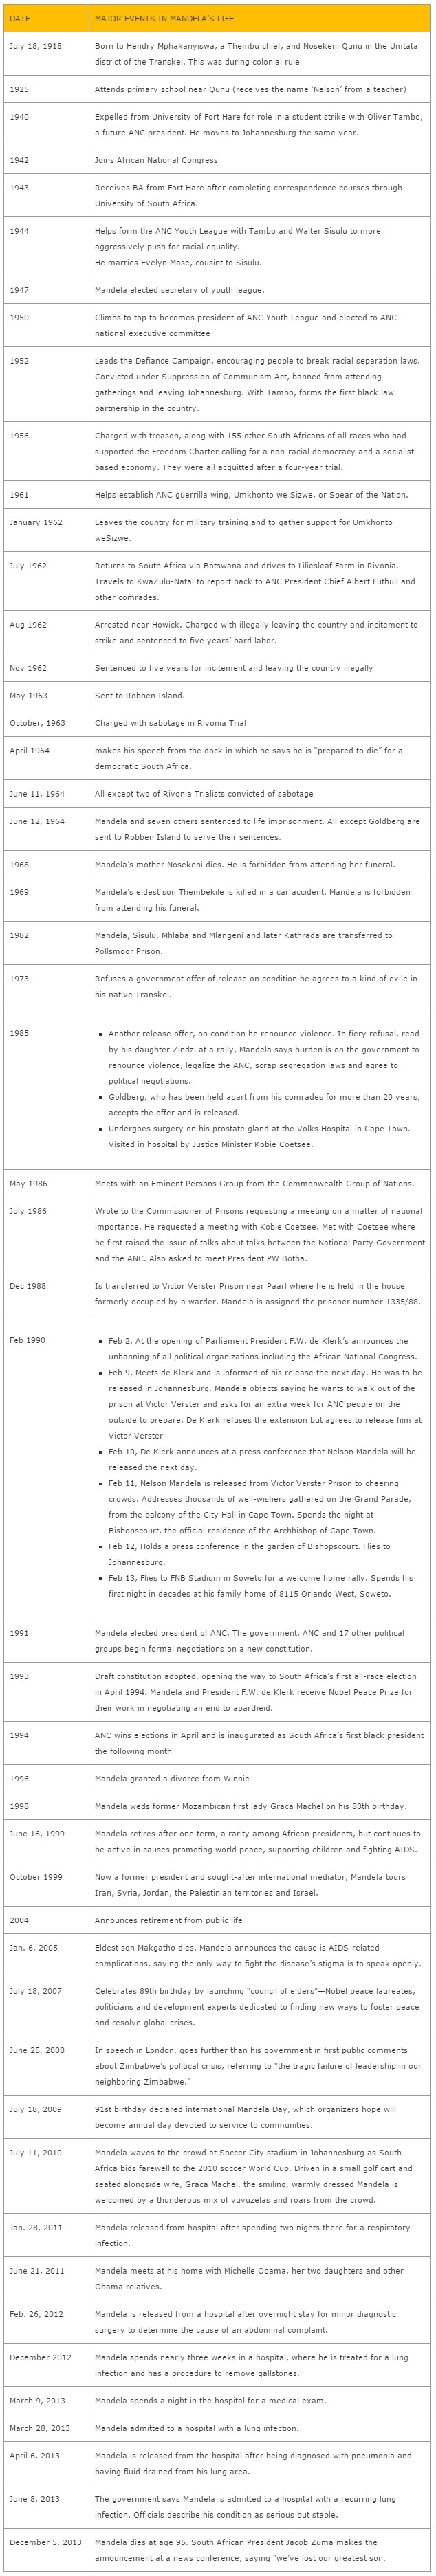 Timeline of major events in Nelson Mandela's life